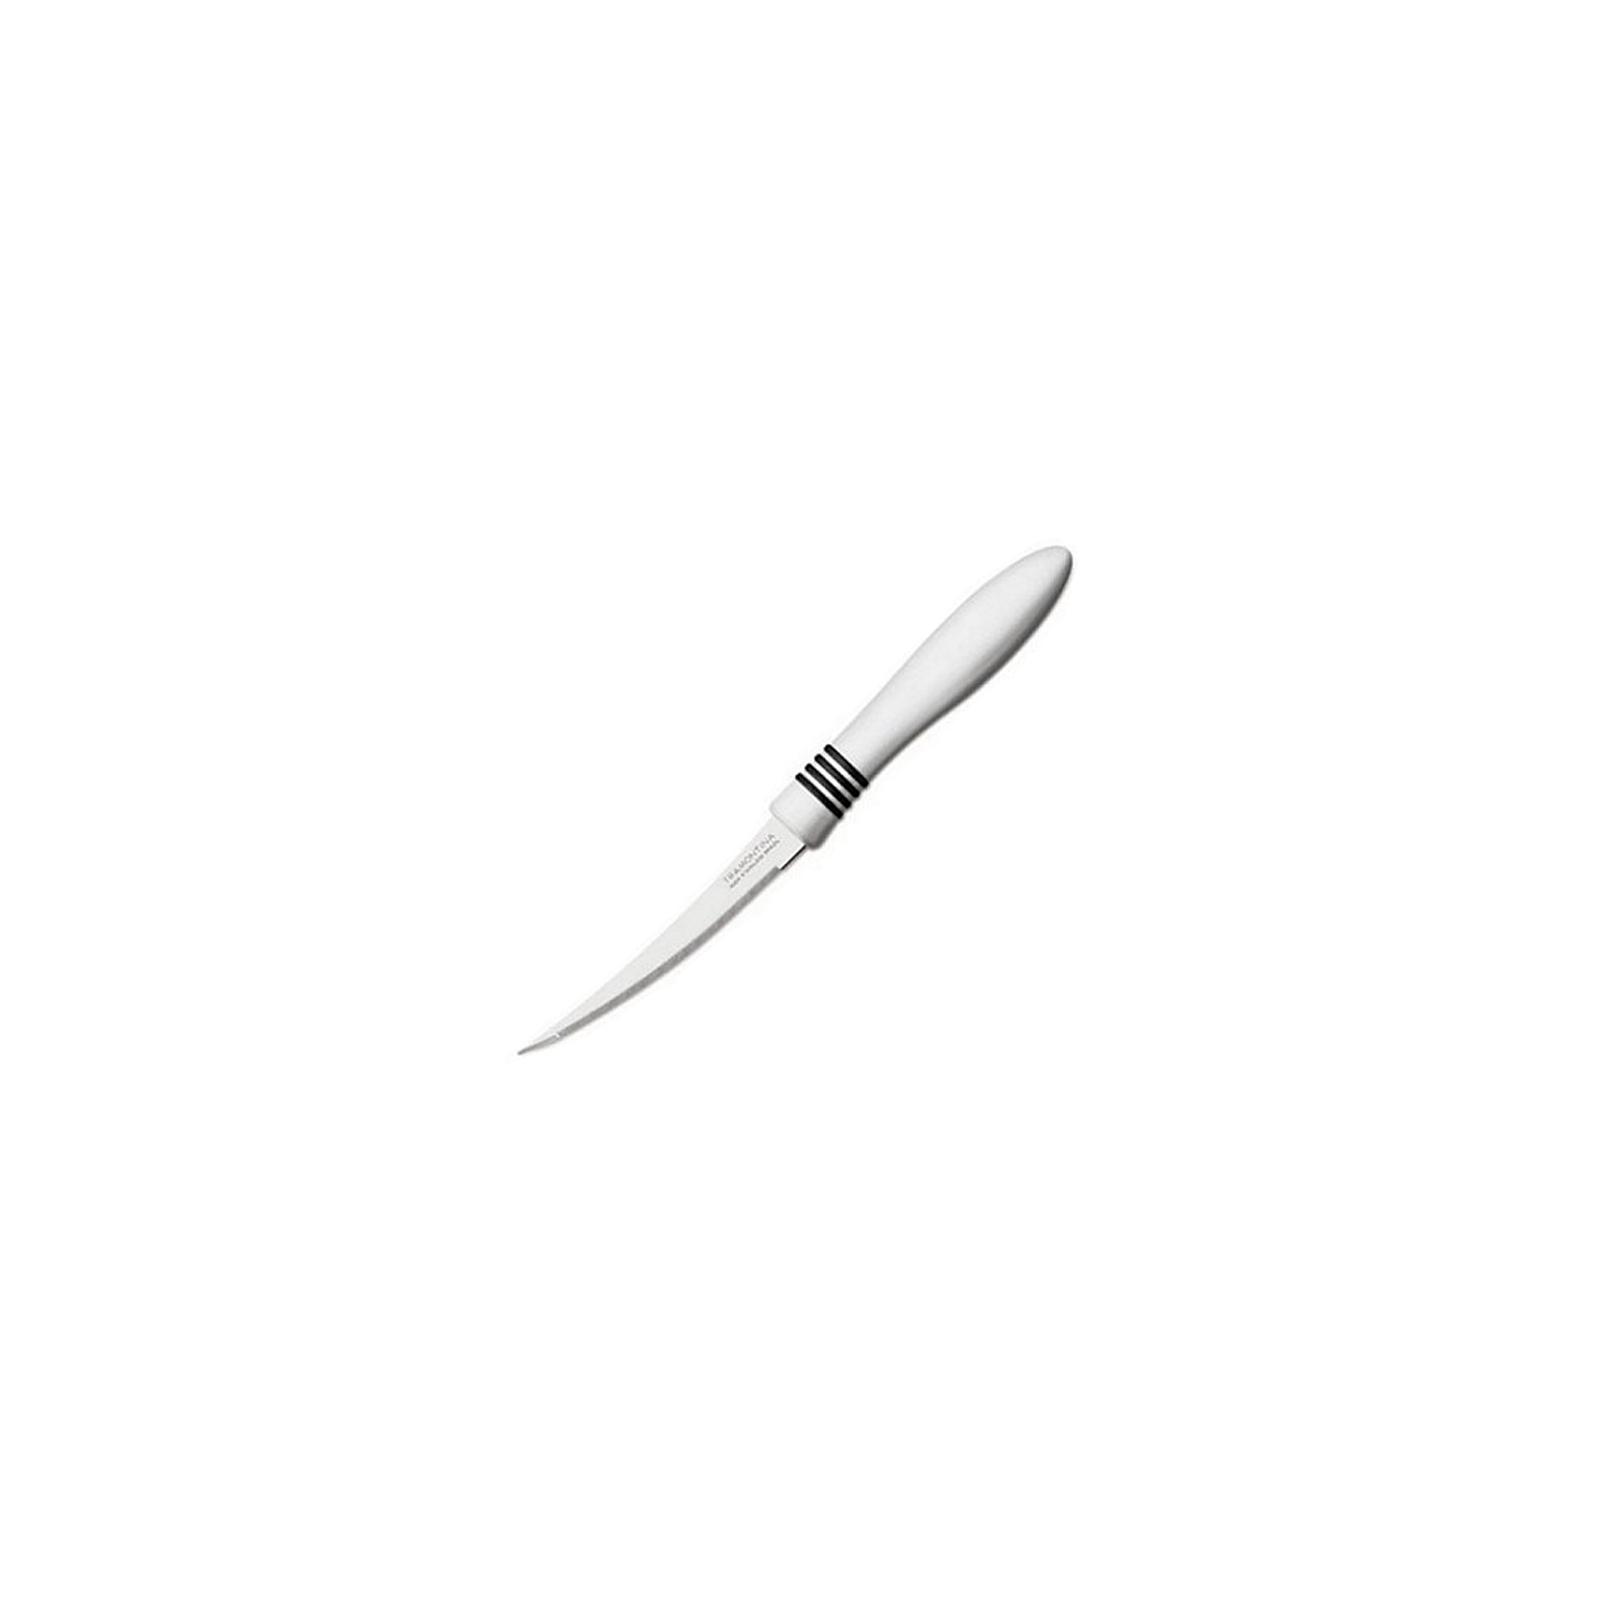 Кухонный нож Tramontina COR & COR для томатов 127 мм Black (23462/105)